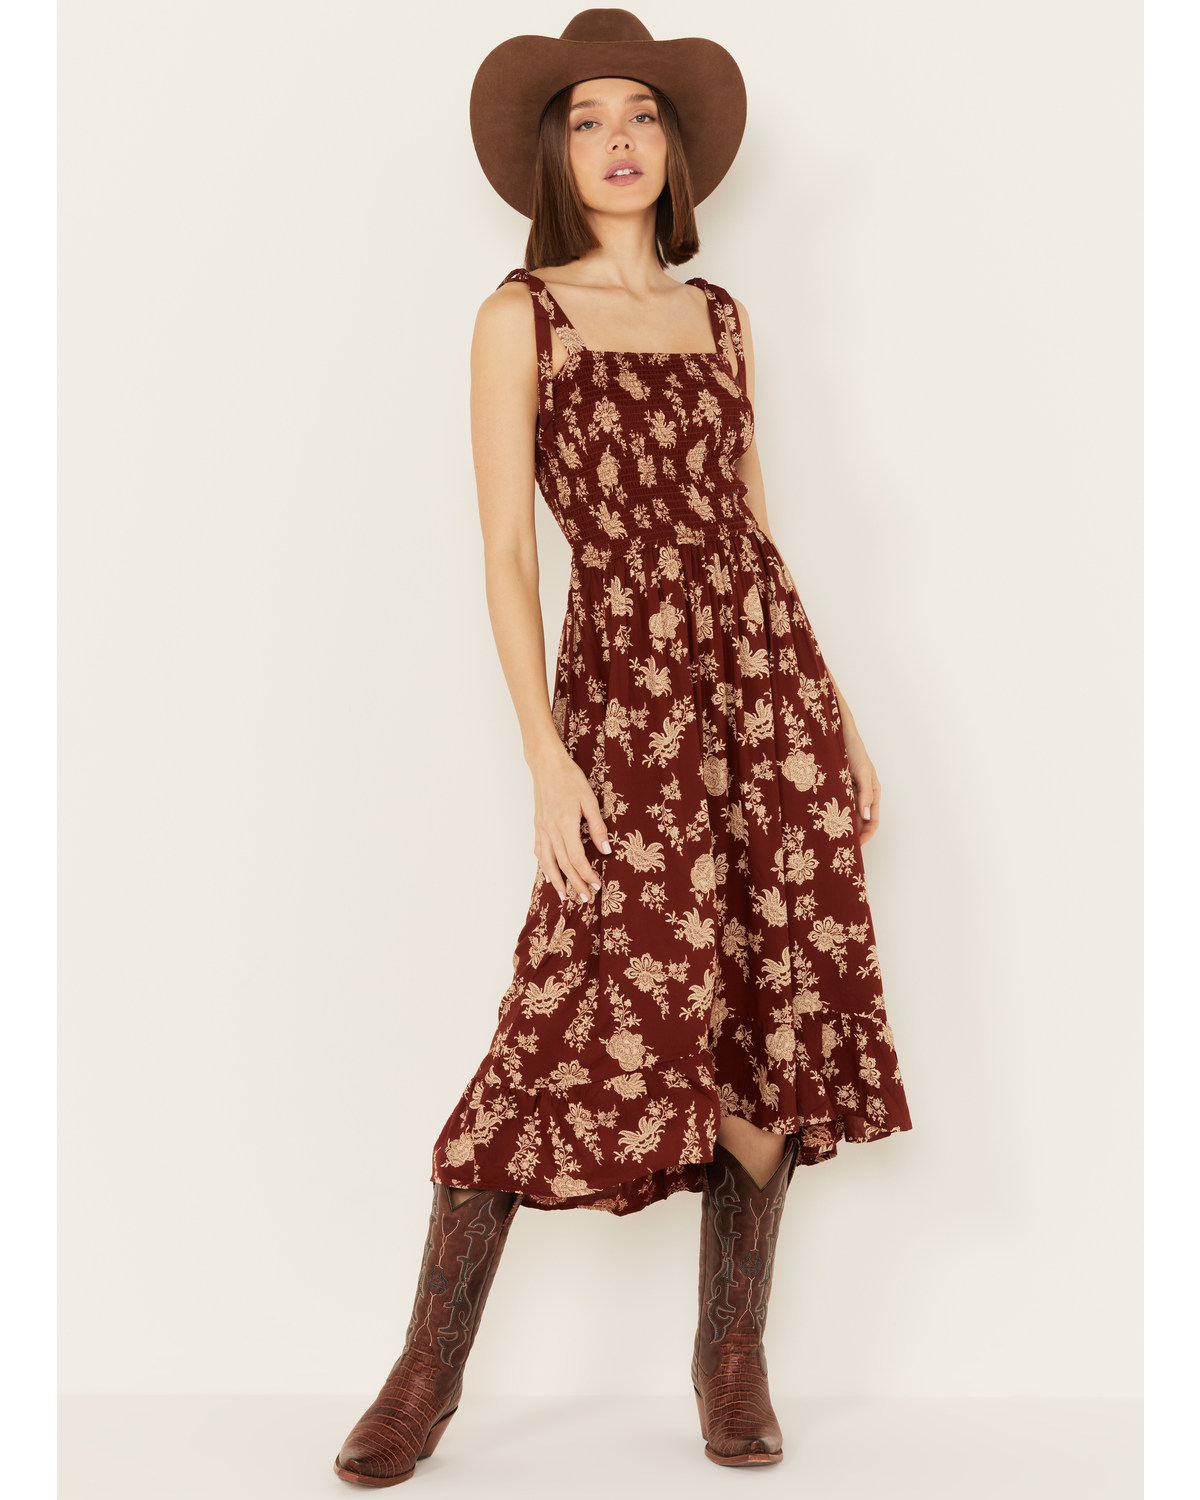 Cotton & Rye Women's Floral Print Sleeveless Midi Dress